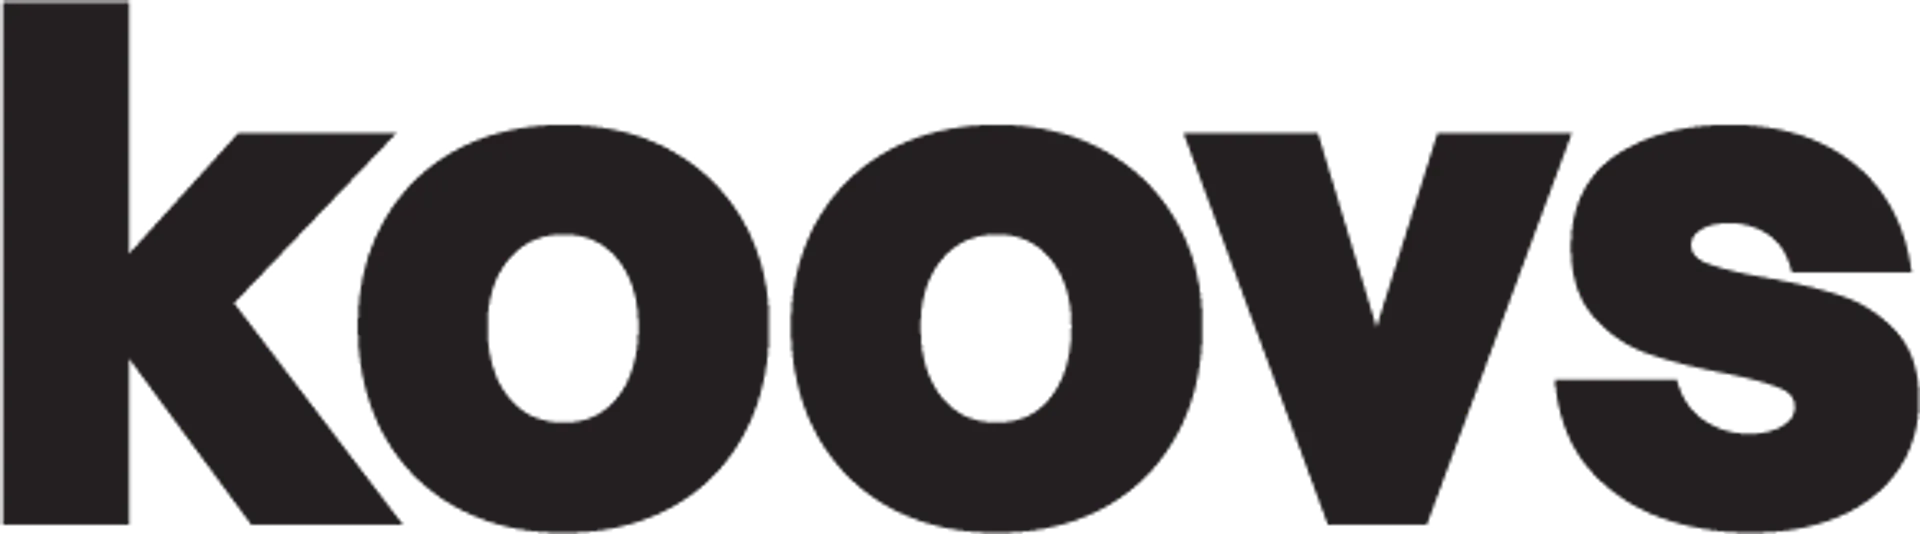 Koovs logo